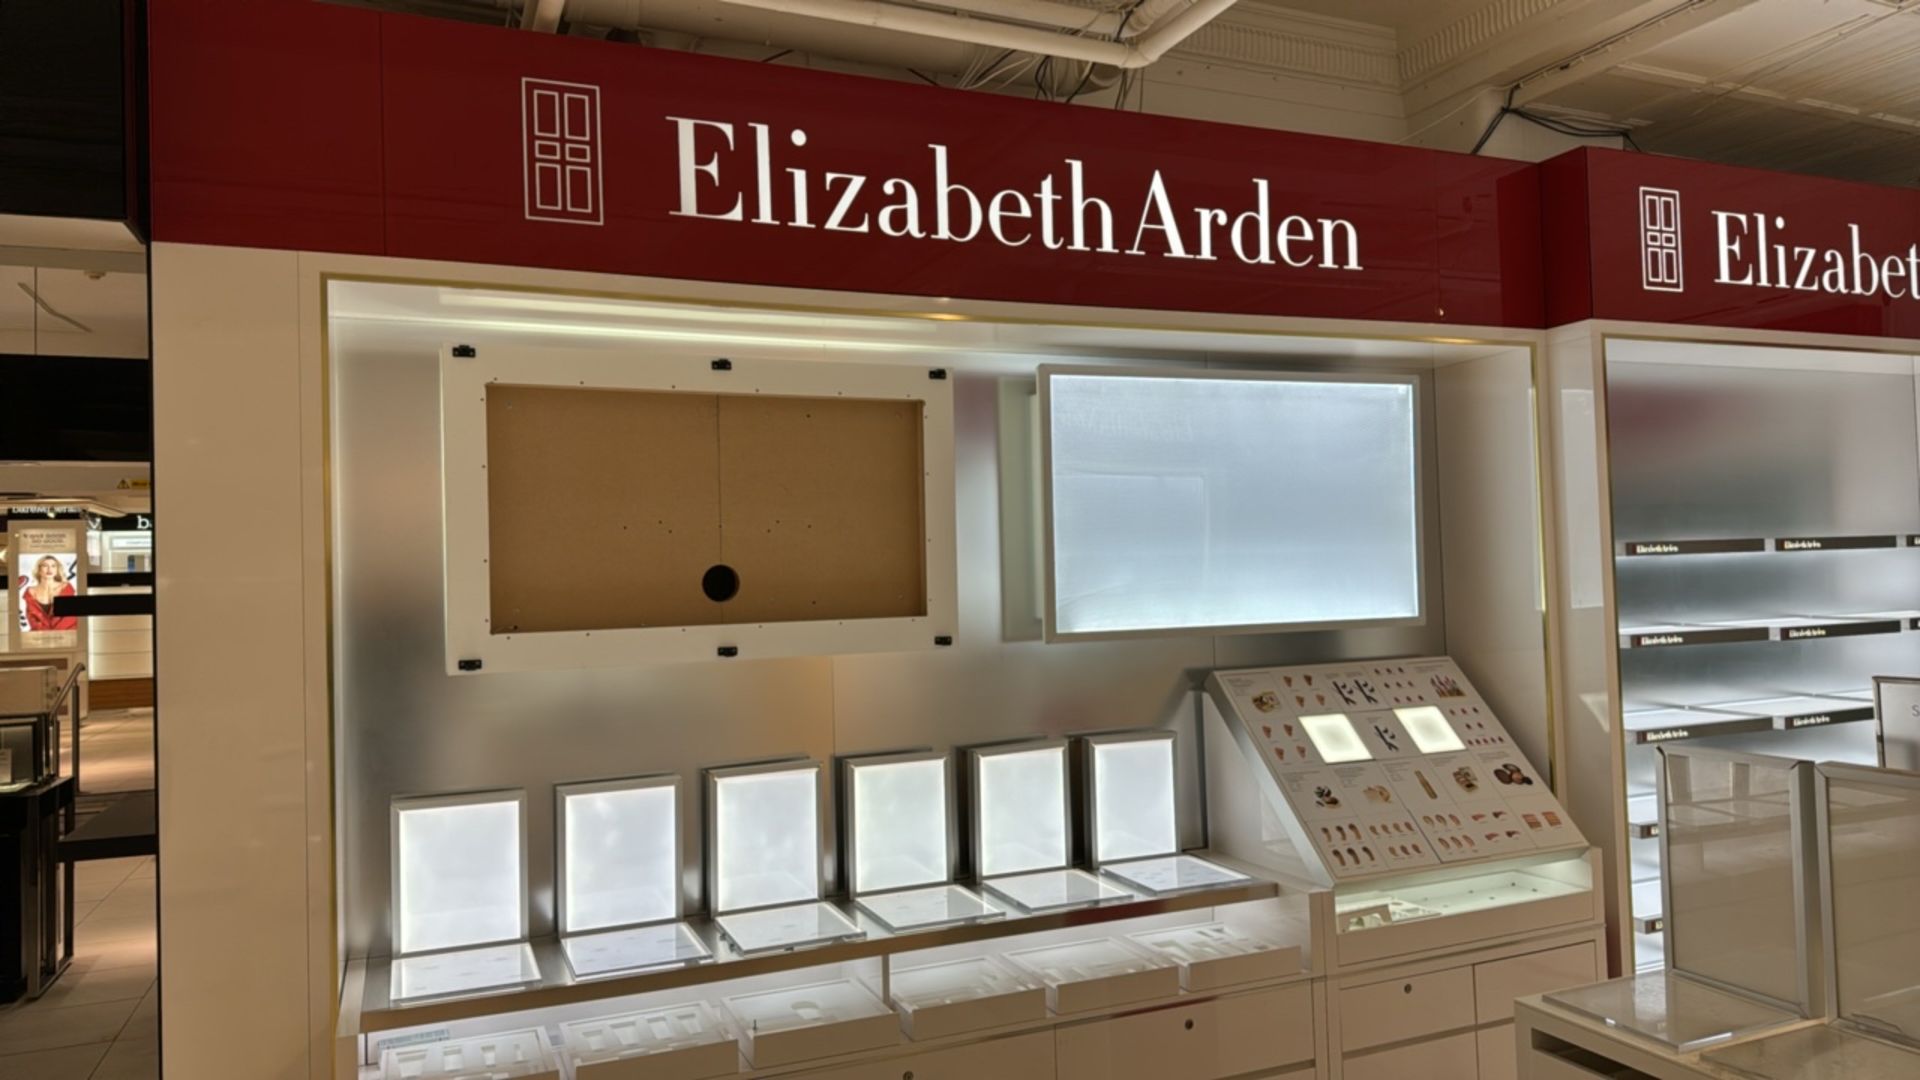 Contents of Elizabeth Arden Concession Area - Image 3 of 7